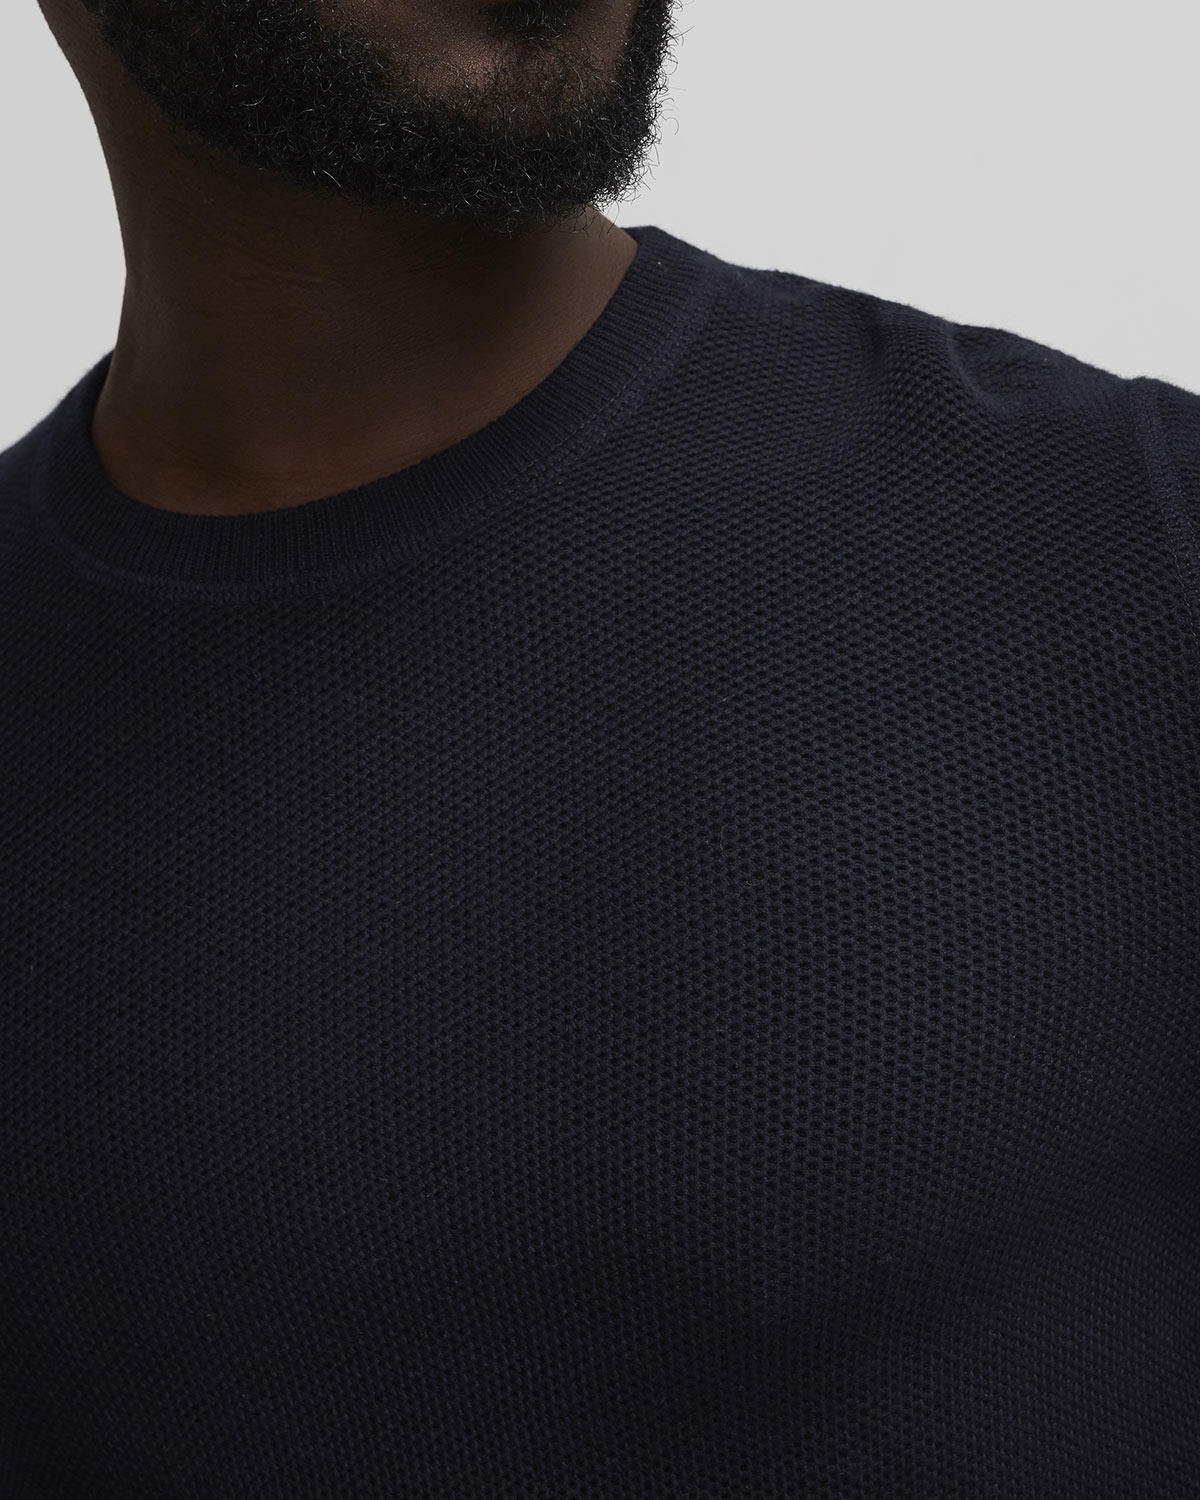 Hubert men's sweater - Black - Buy online at NN07®